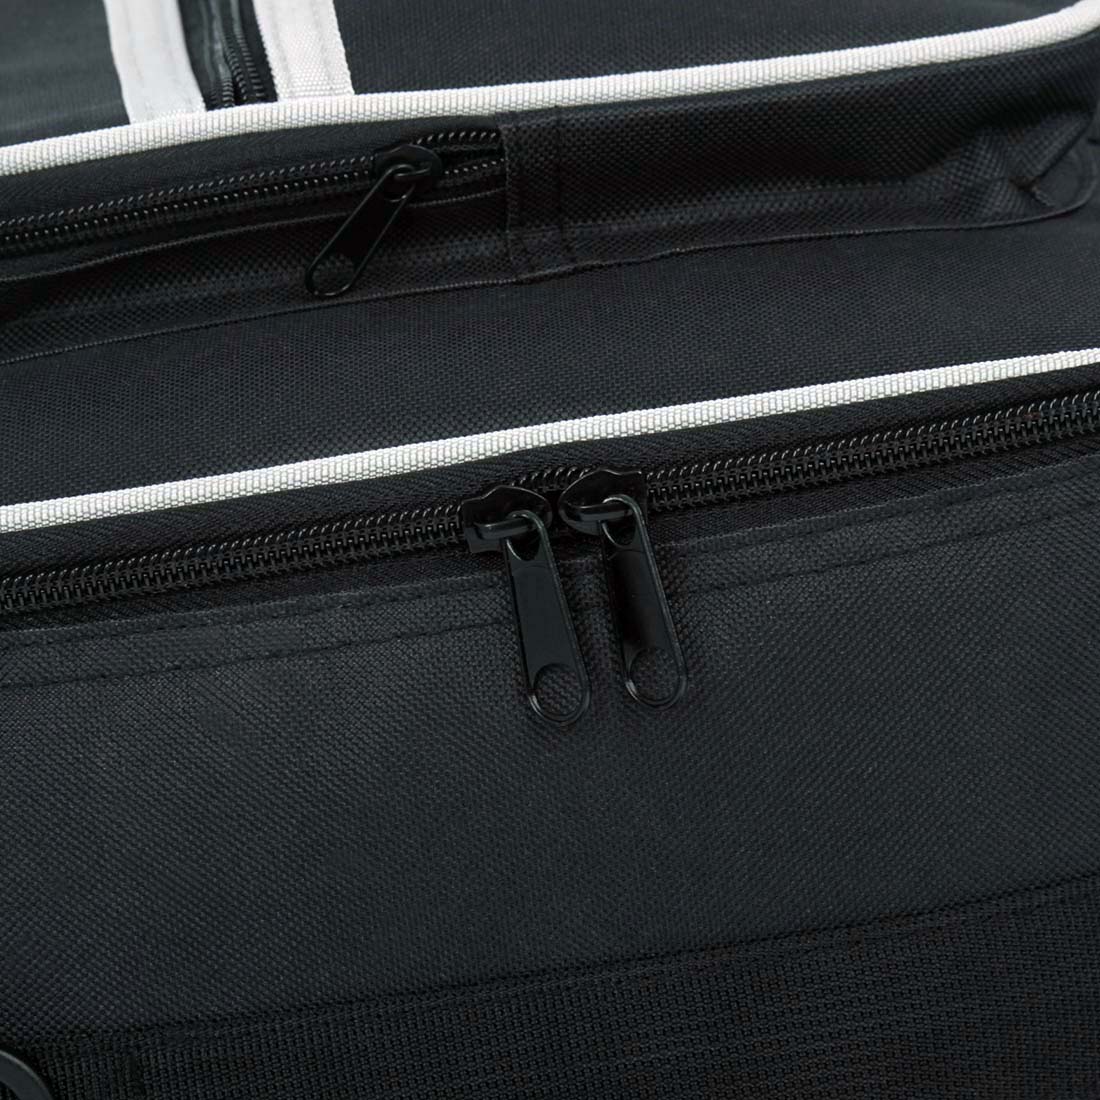 Double Bass Drum Pedal Shoulder Bag Portable Storage Carrying Case ...